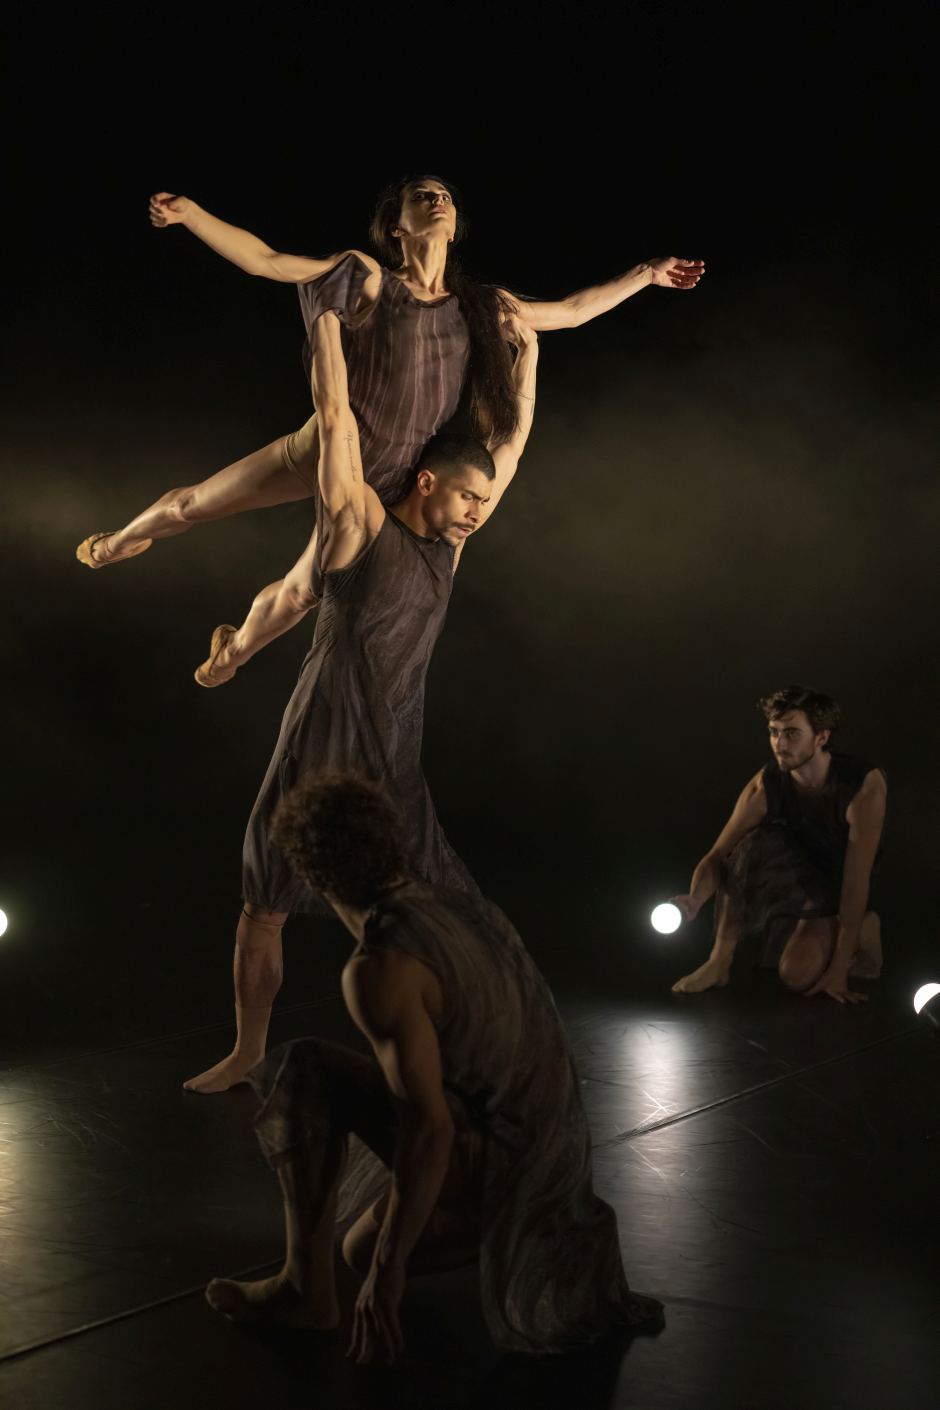 4. D.Vishneva (Maria), L.Axel, E.Nunes, and M.Kinley, “Maria” by G.Montero, Ballet of the State Theater Nuremberg 2022 © J.Vallinas